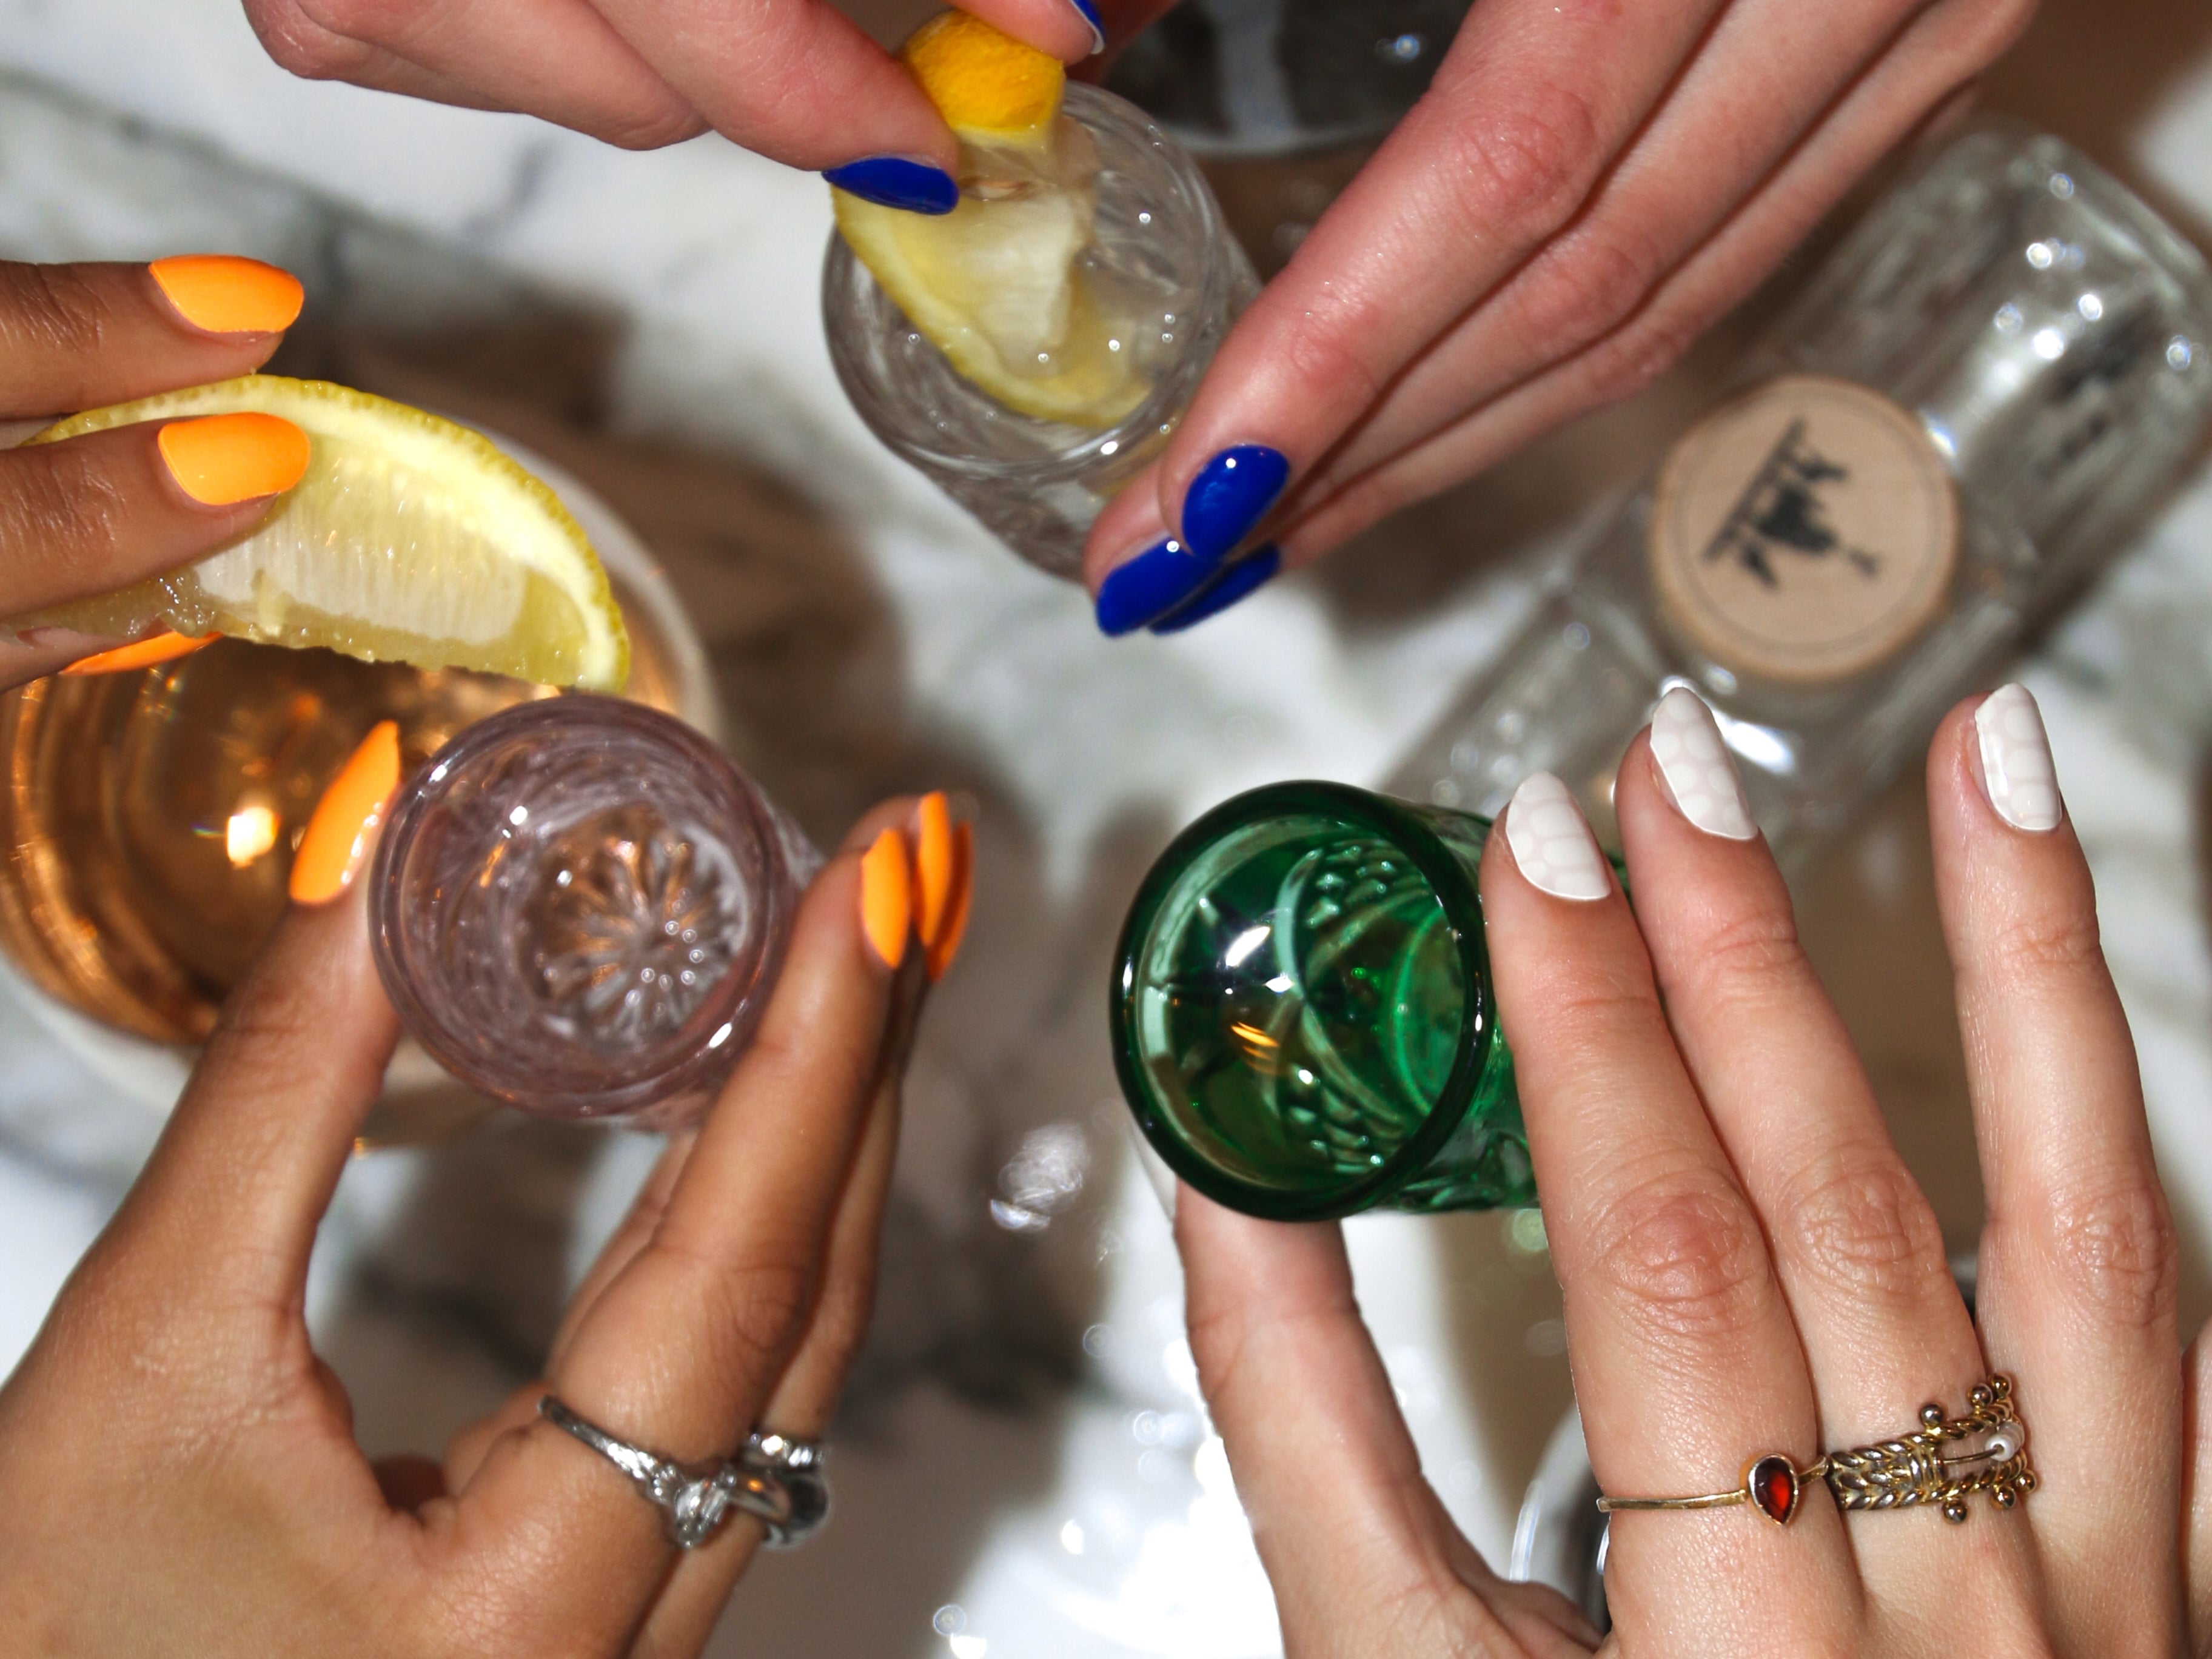 Hands celebrating with Oprah Orange, Blue and White Maniac Nail Gel Polish Stickers